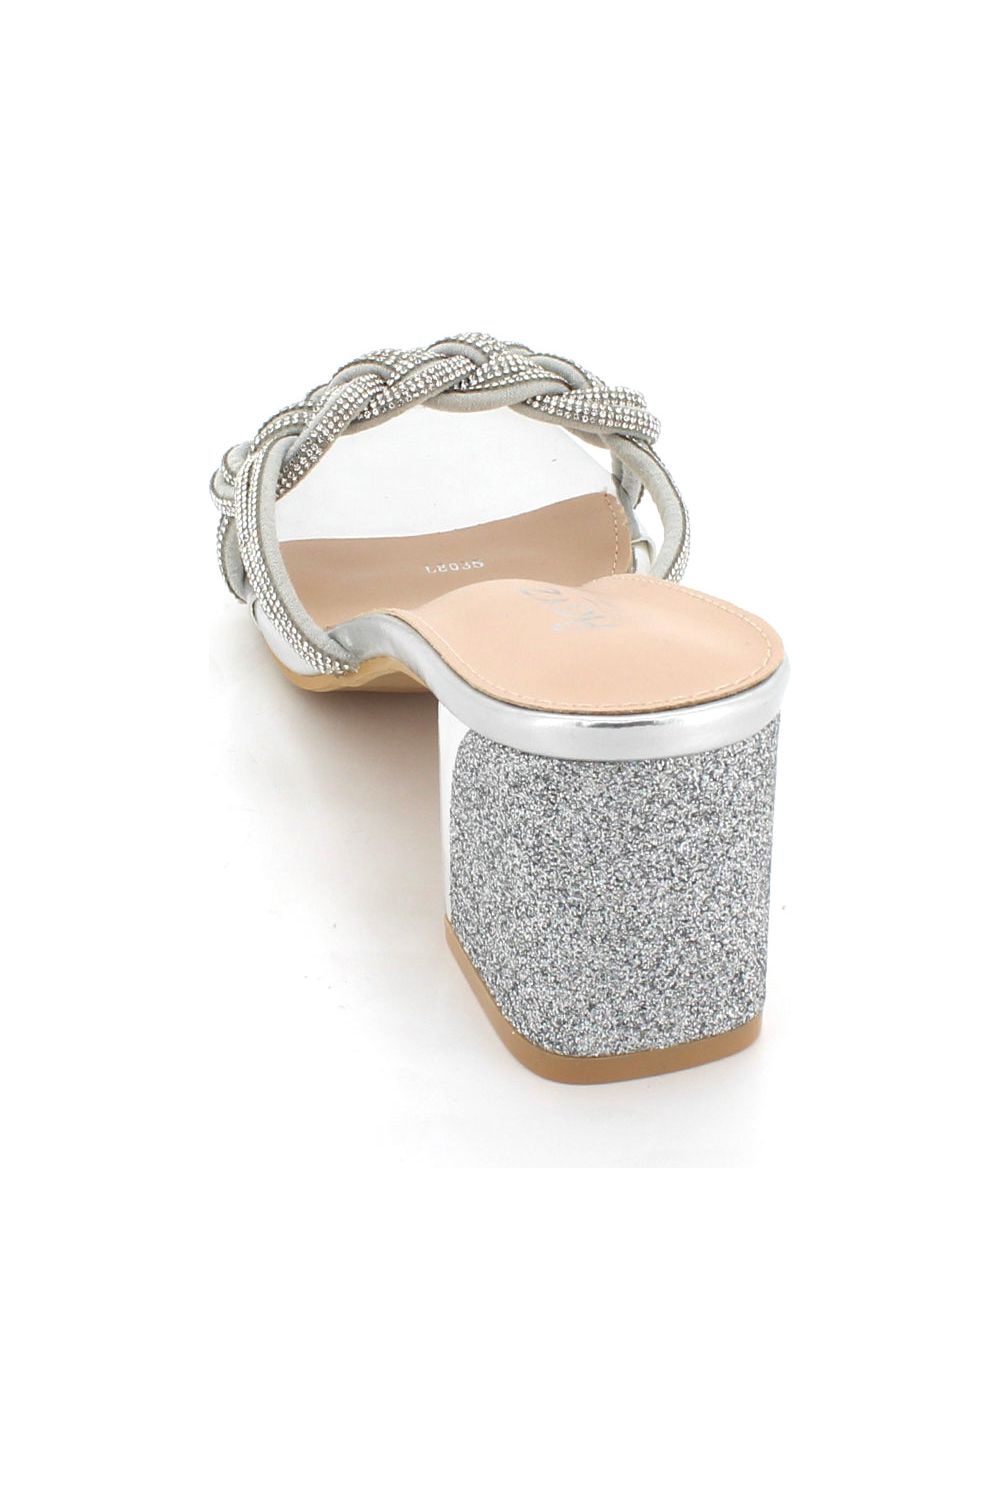 Diamante Party Prom Bridal Block Heel Sandals L8034